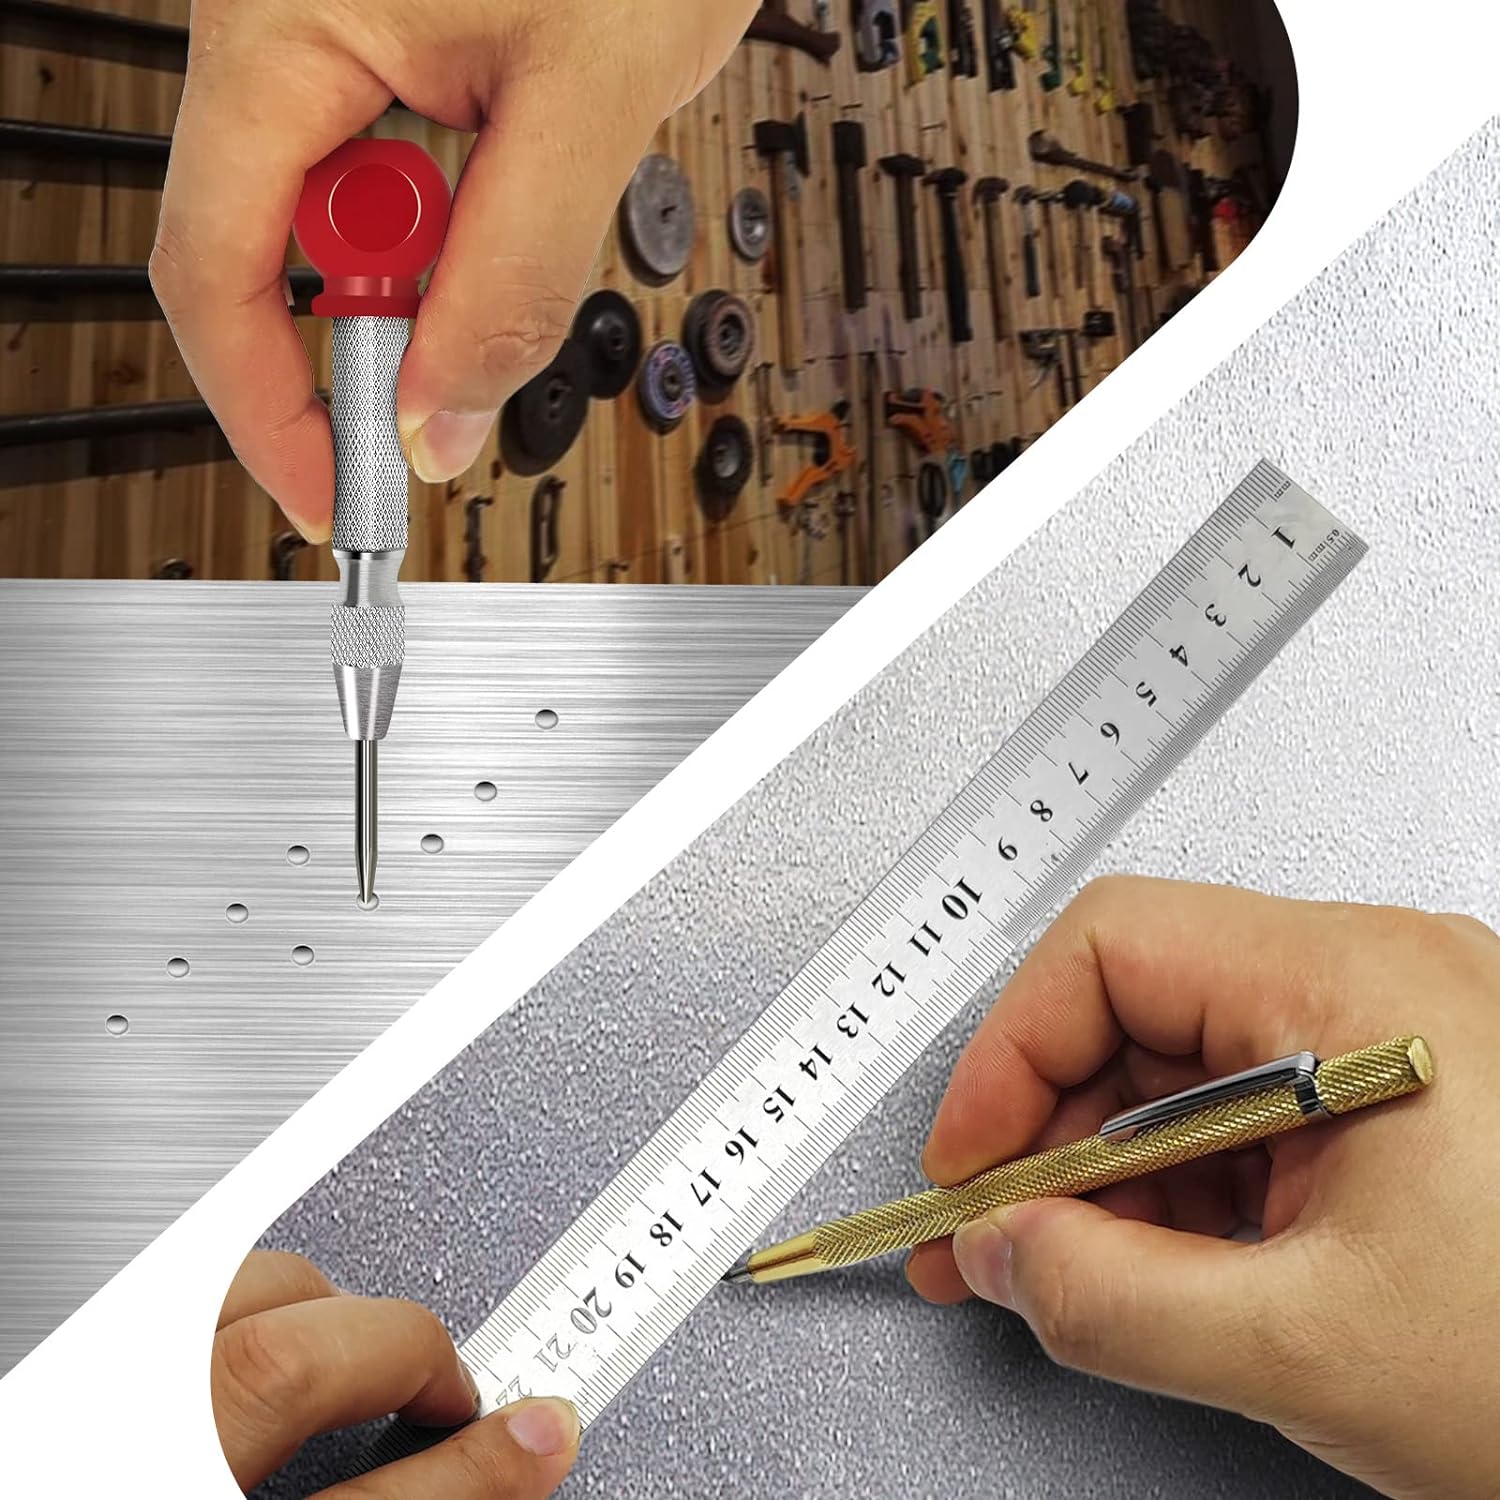 Mechanical Carpenter Pencils Set with 30 Marker Refills for Architect Construction